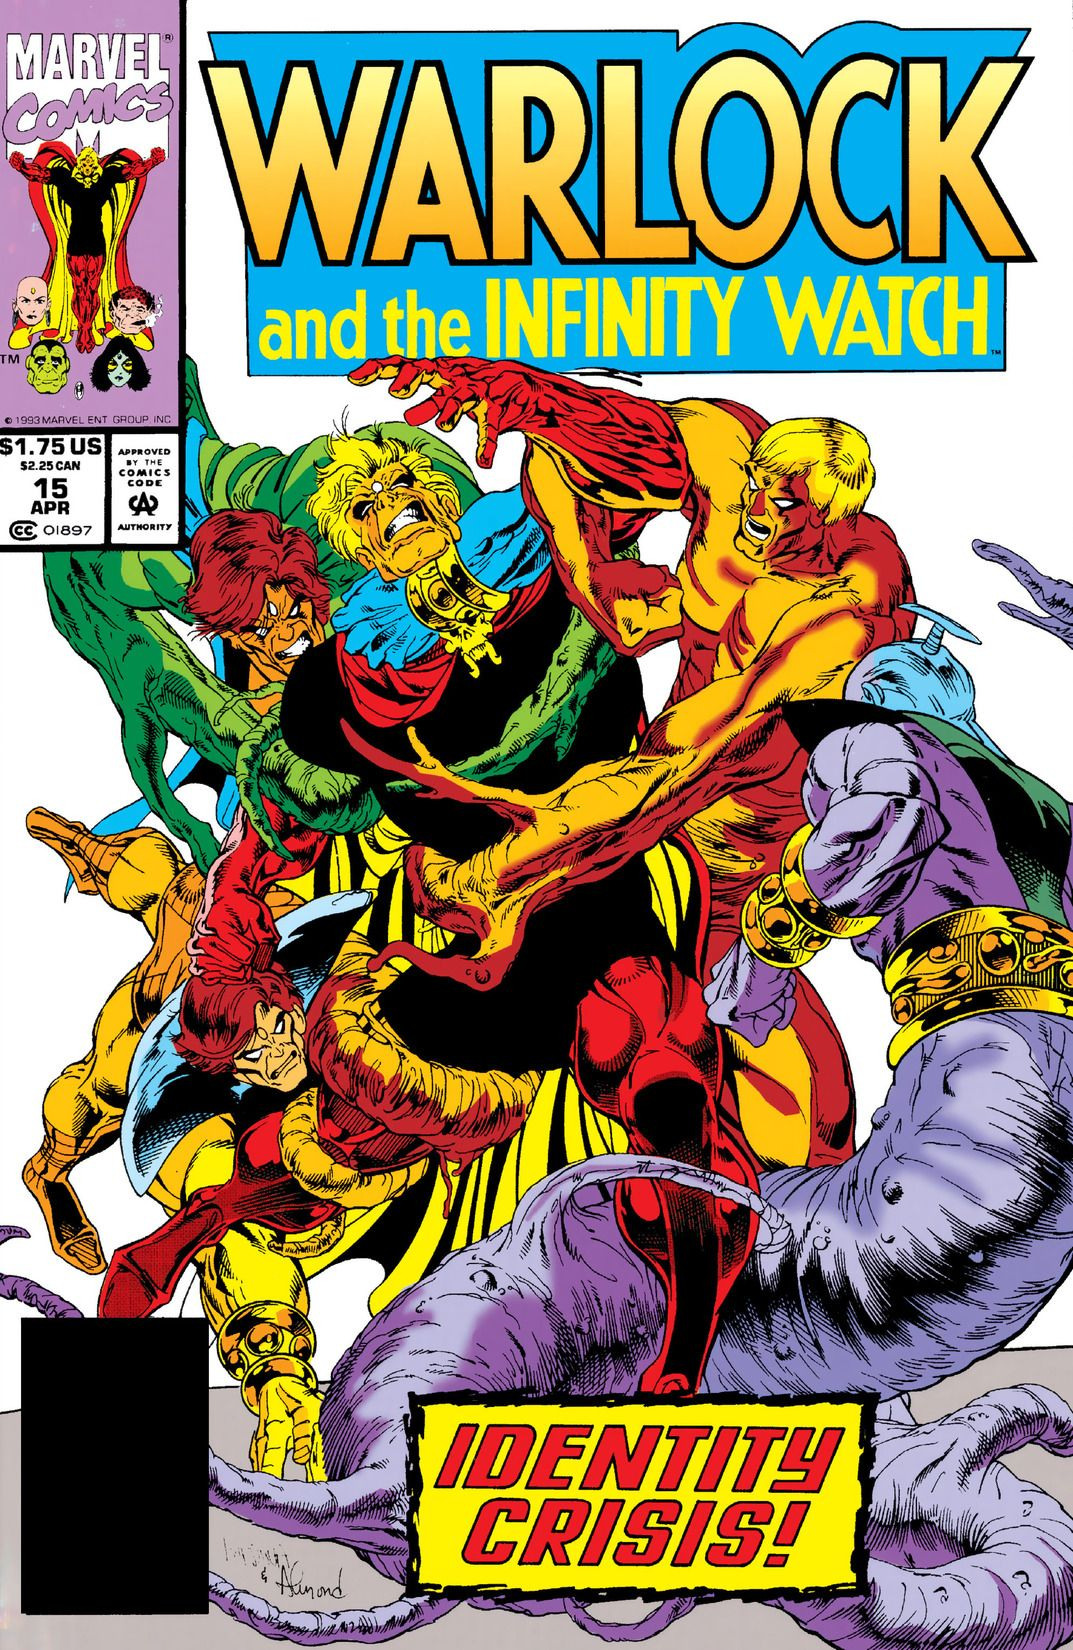 Warlock and the Infinity Watch #1 and #20 Marvel Comics KEY MCU | eBay